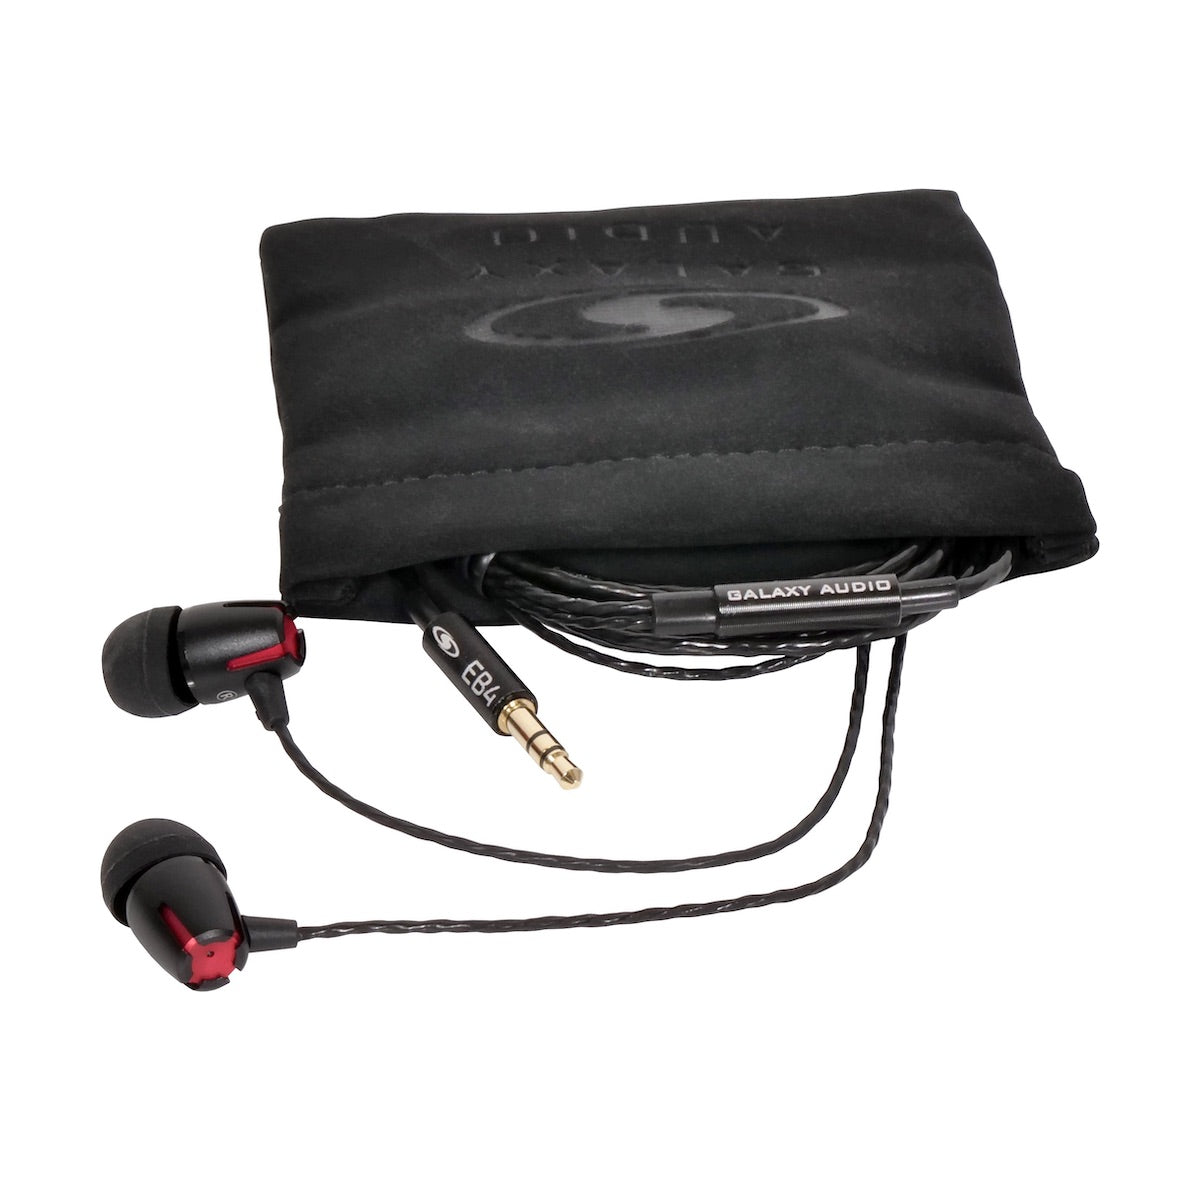 Galaxy Audio EB4 - Single Driver Standard Earbuds, soft case